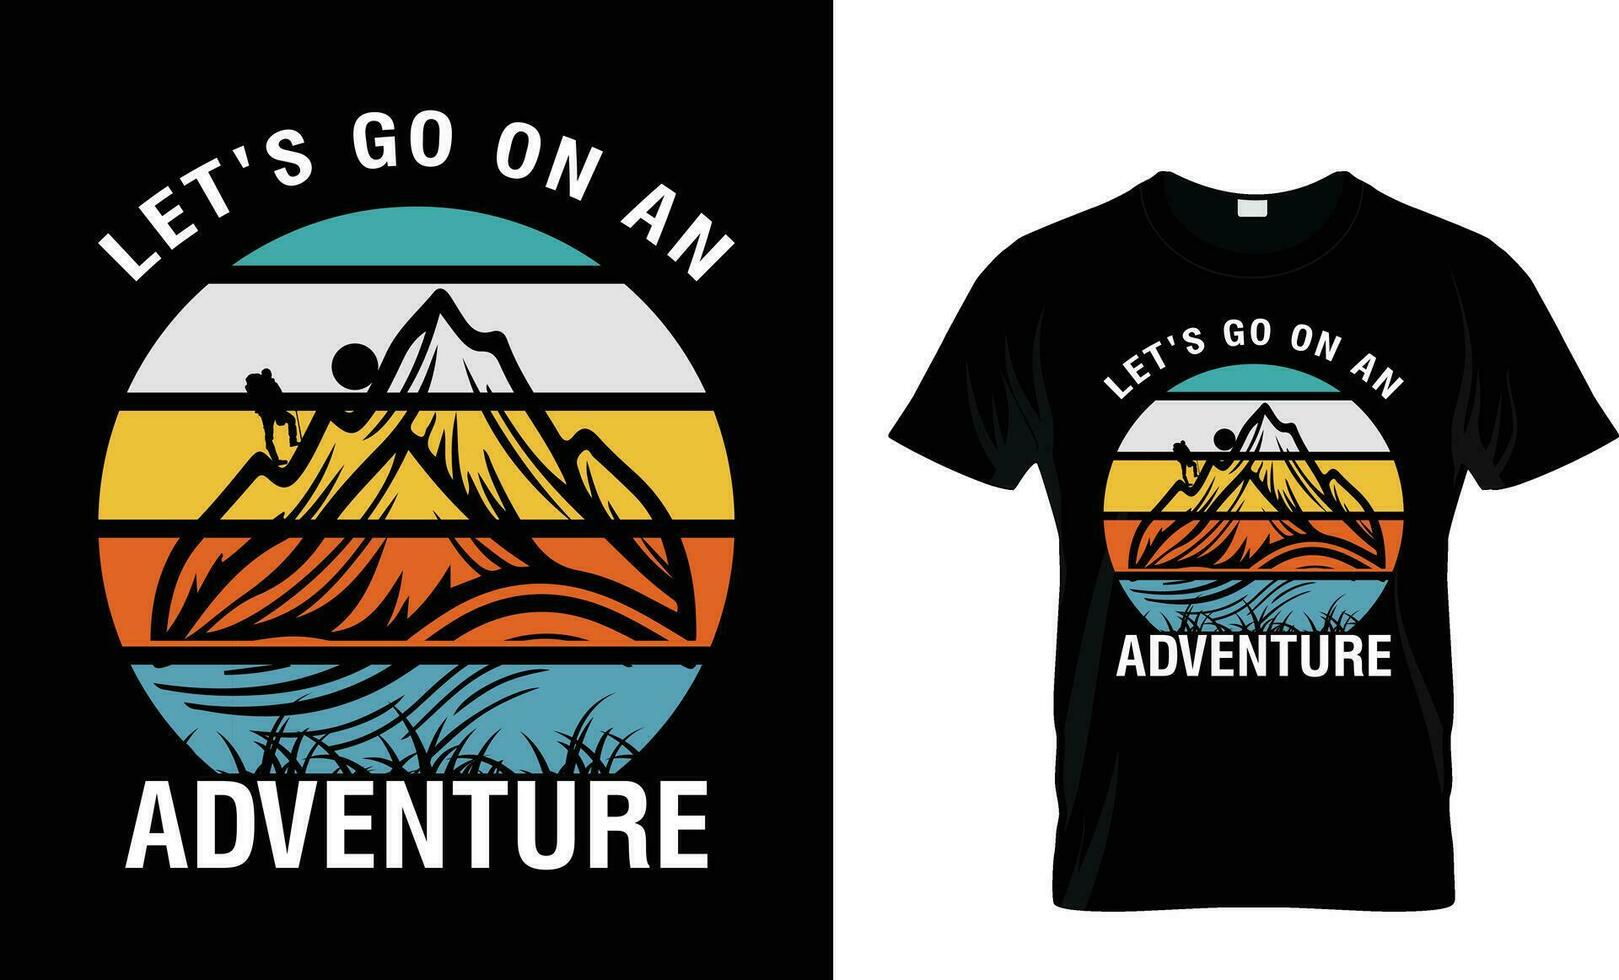 let's go on an adventure,Hiking adventure tshirt design hiking logo design vector